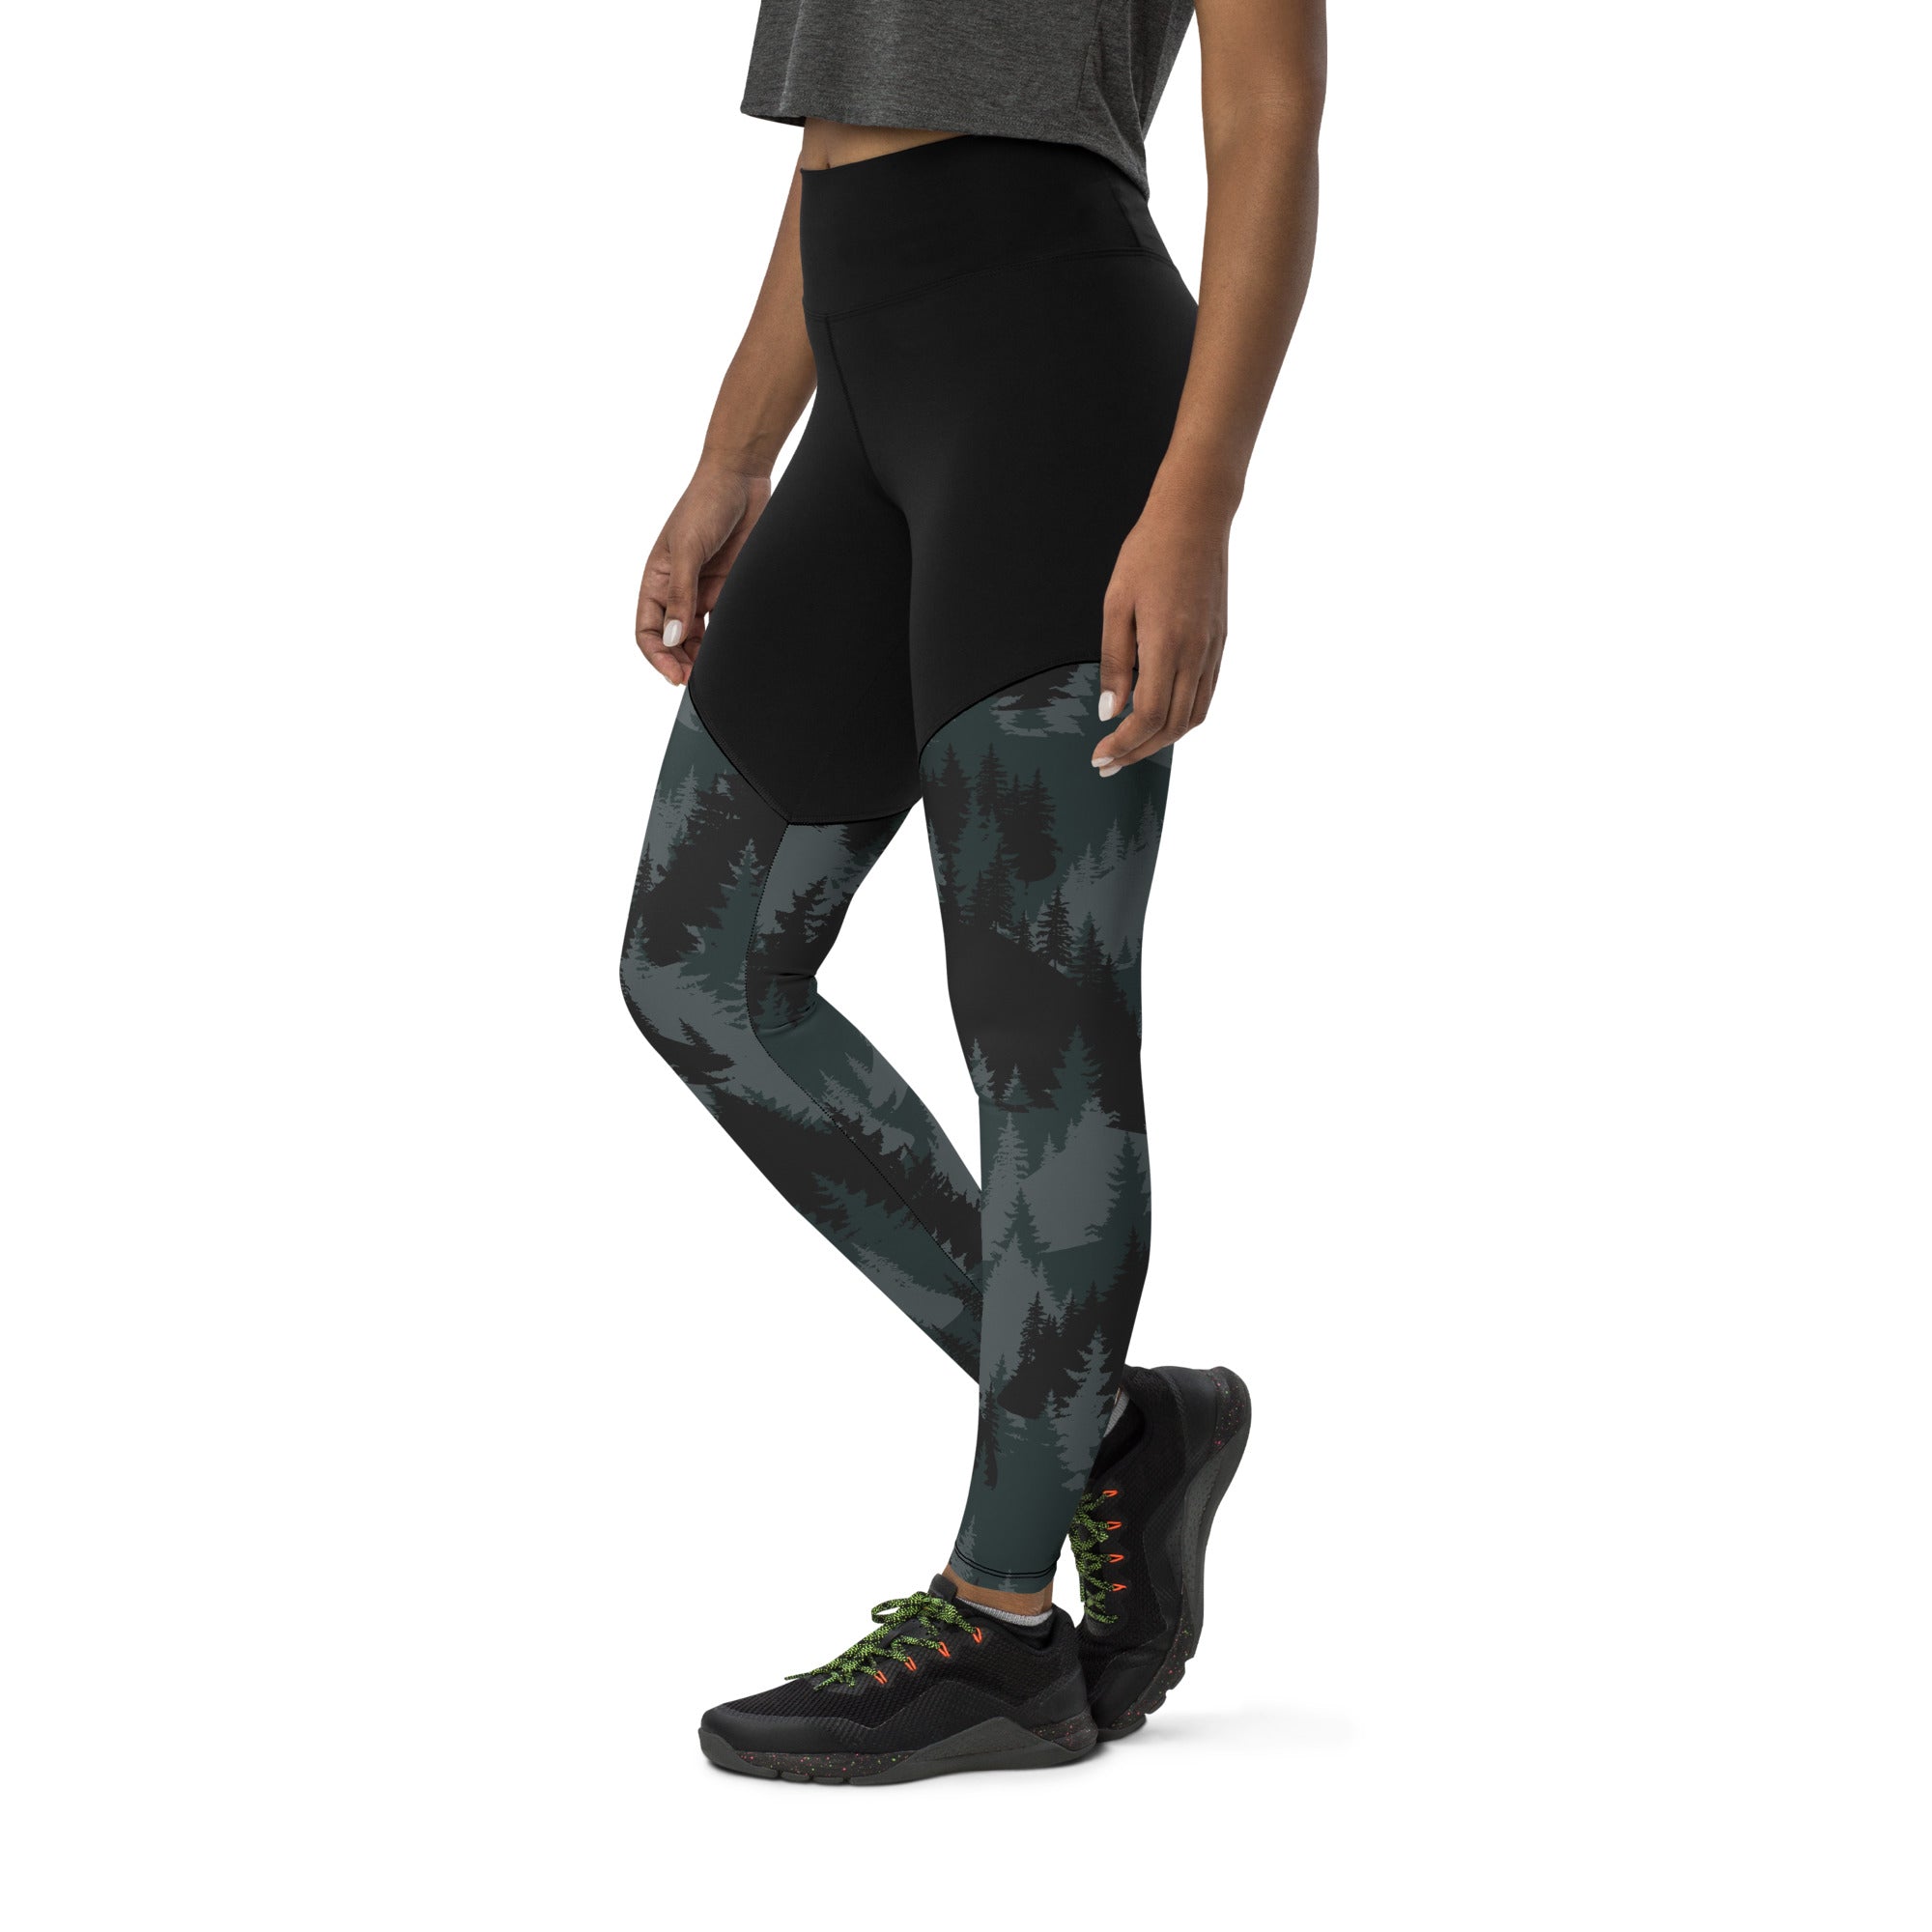 Sport compression leggings